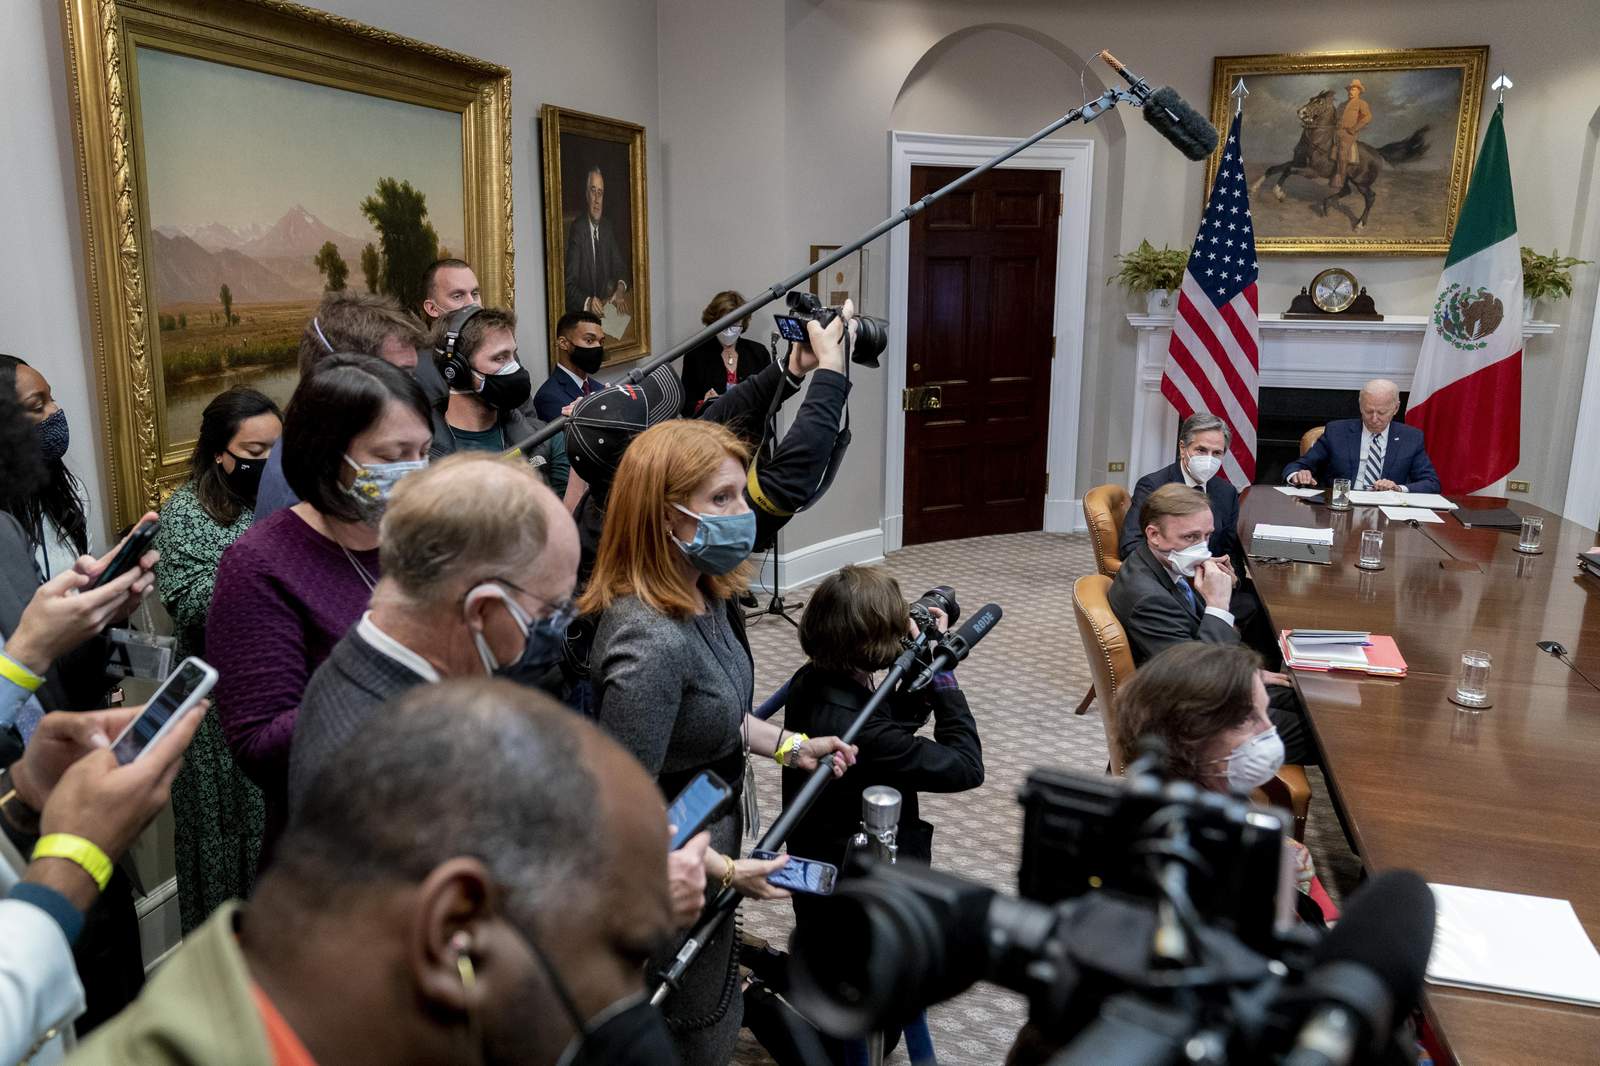 Biden's Cabinet half-empty after slow start in confirmations